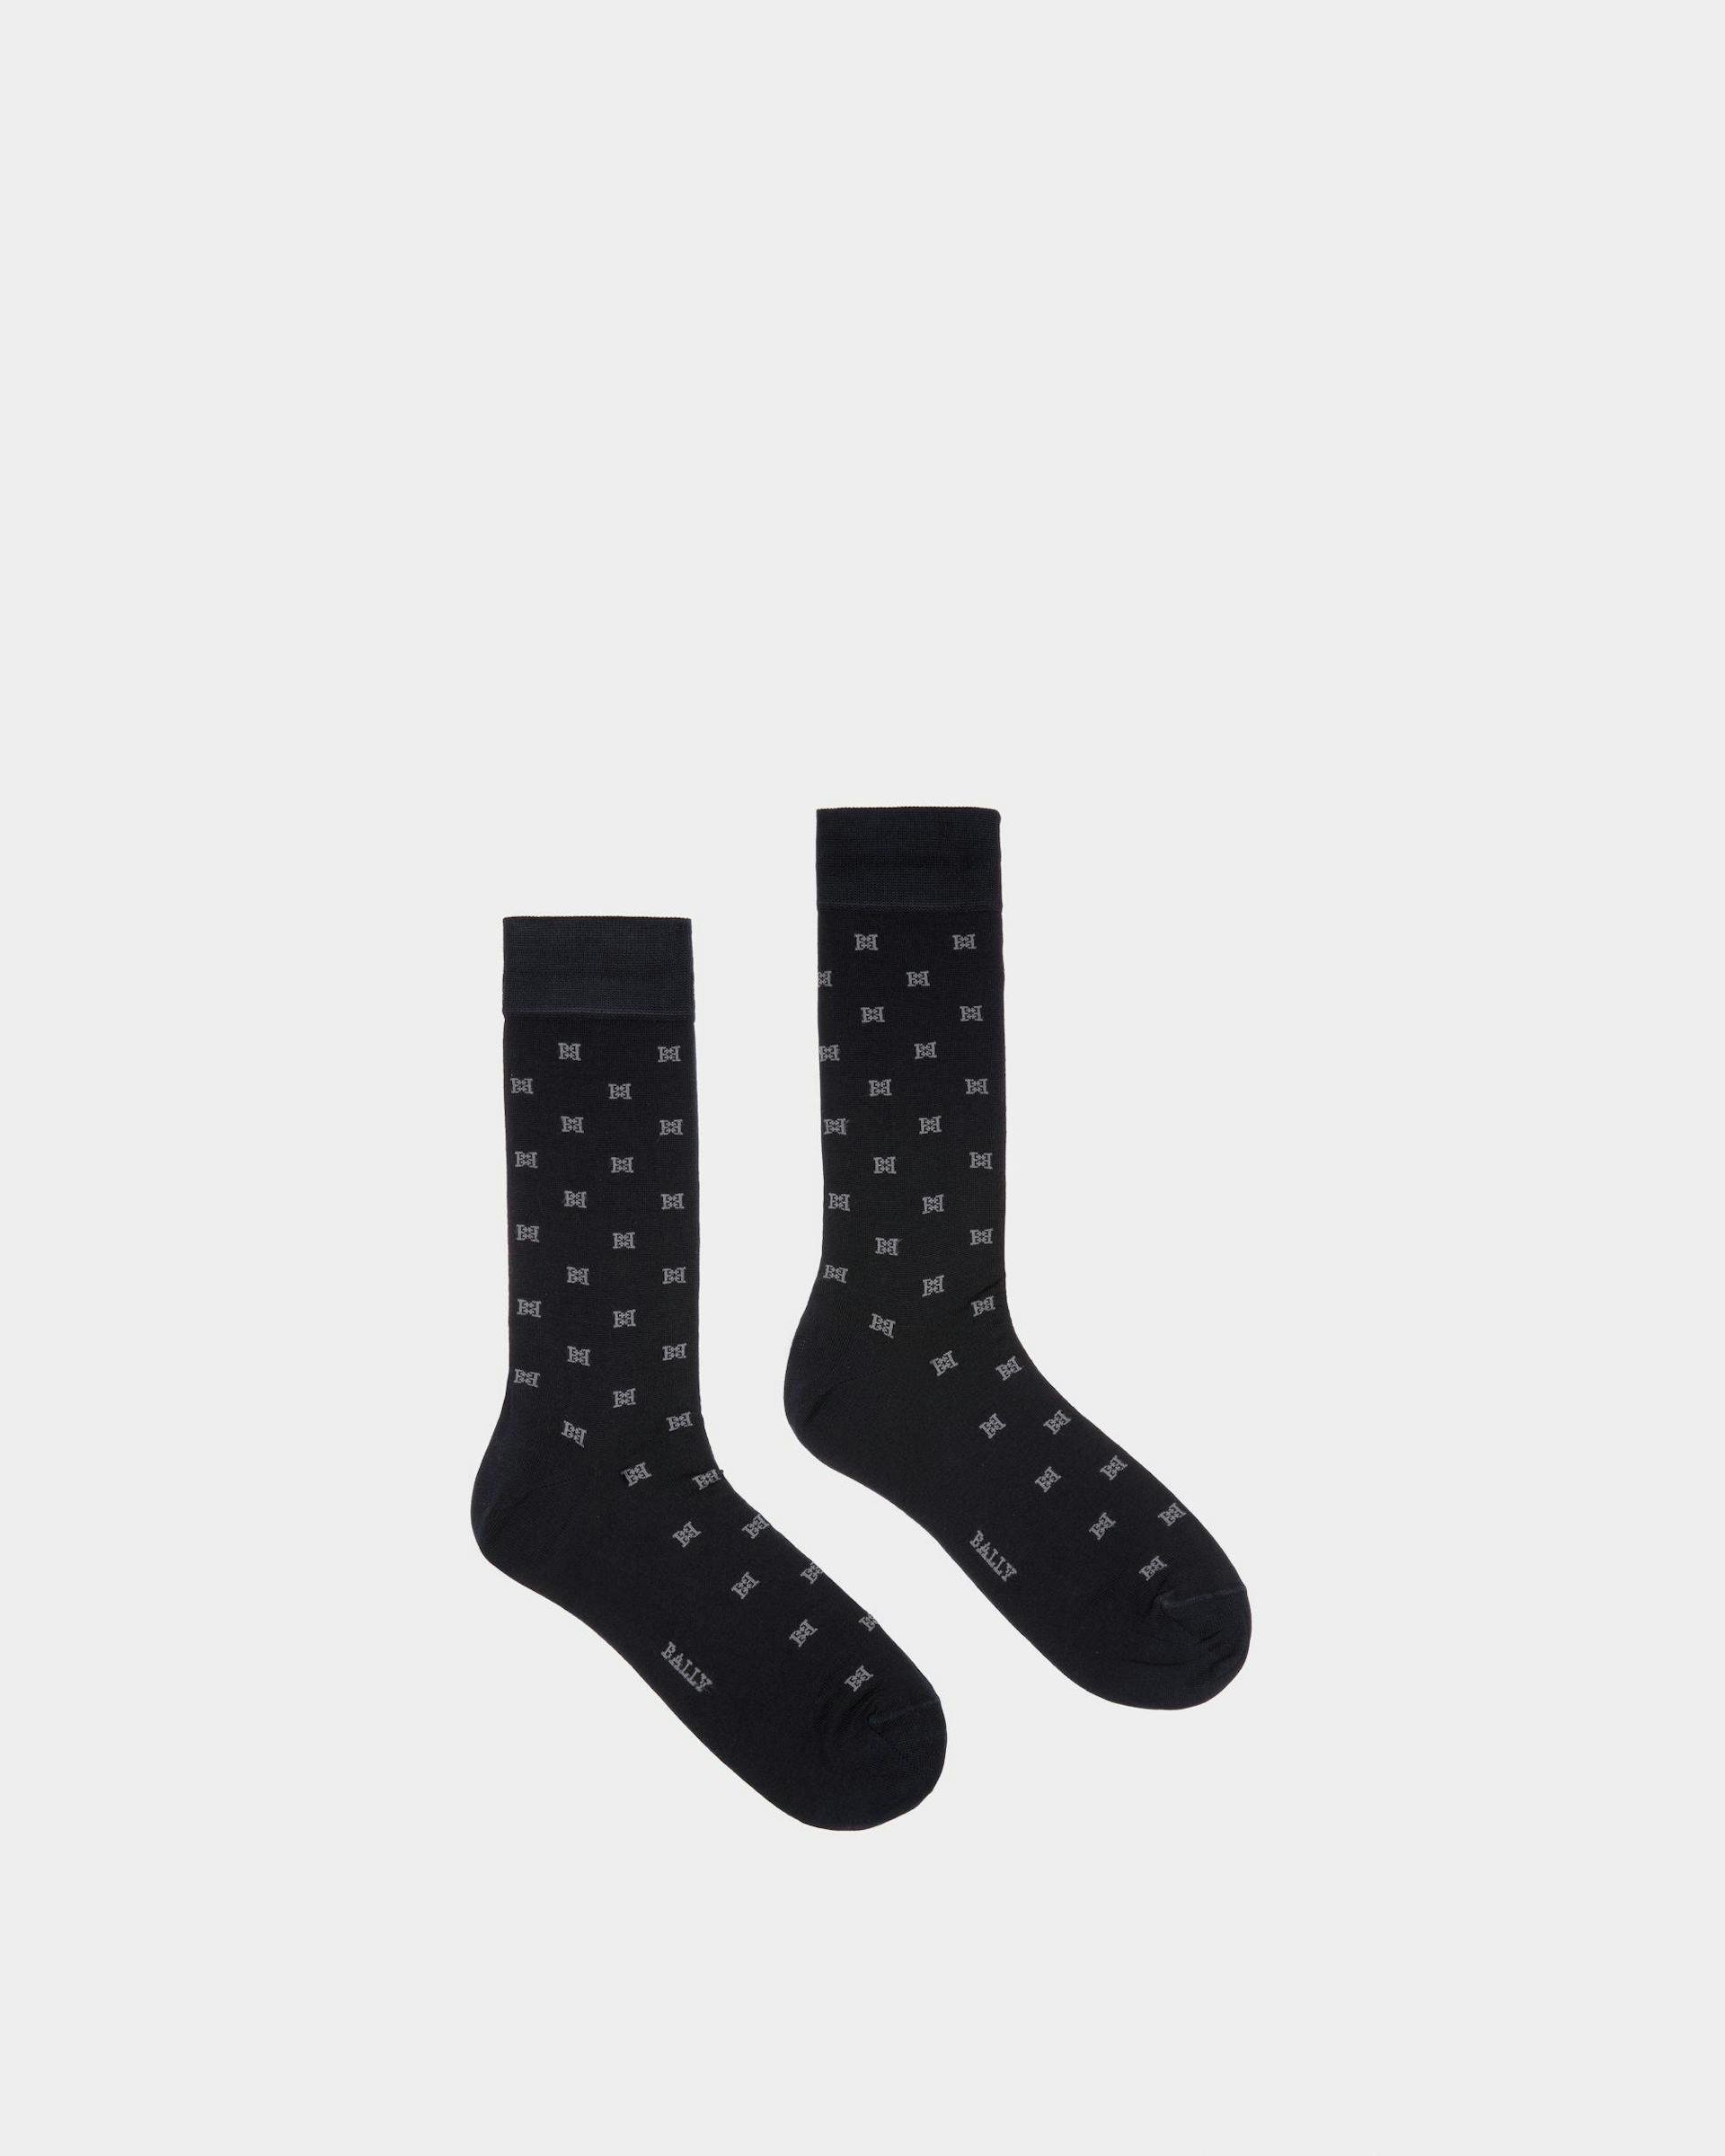 Jacquard-Socken Socken Aus Baumwolljacquard In Marineblau Und Grau - Herren - Bally - 01